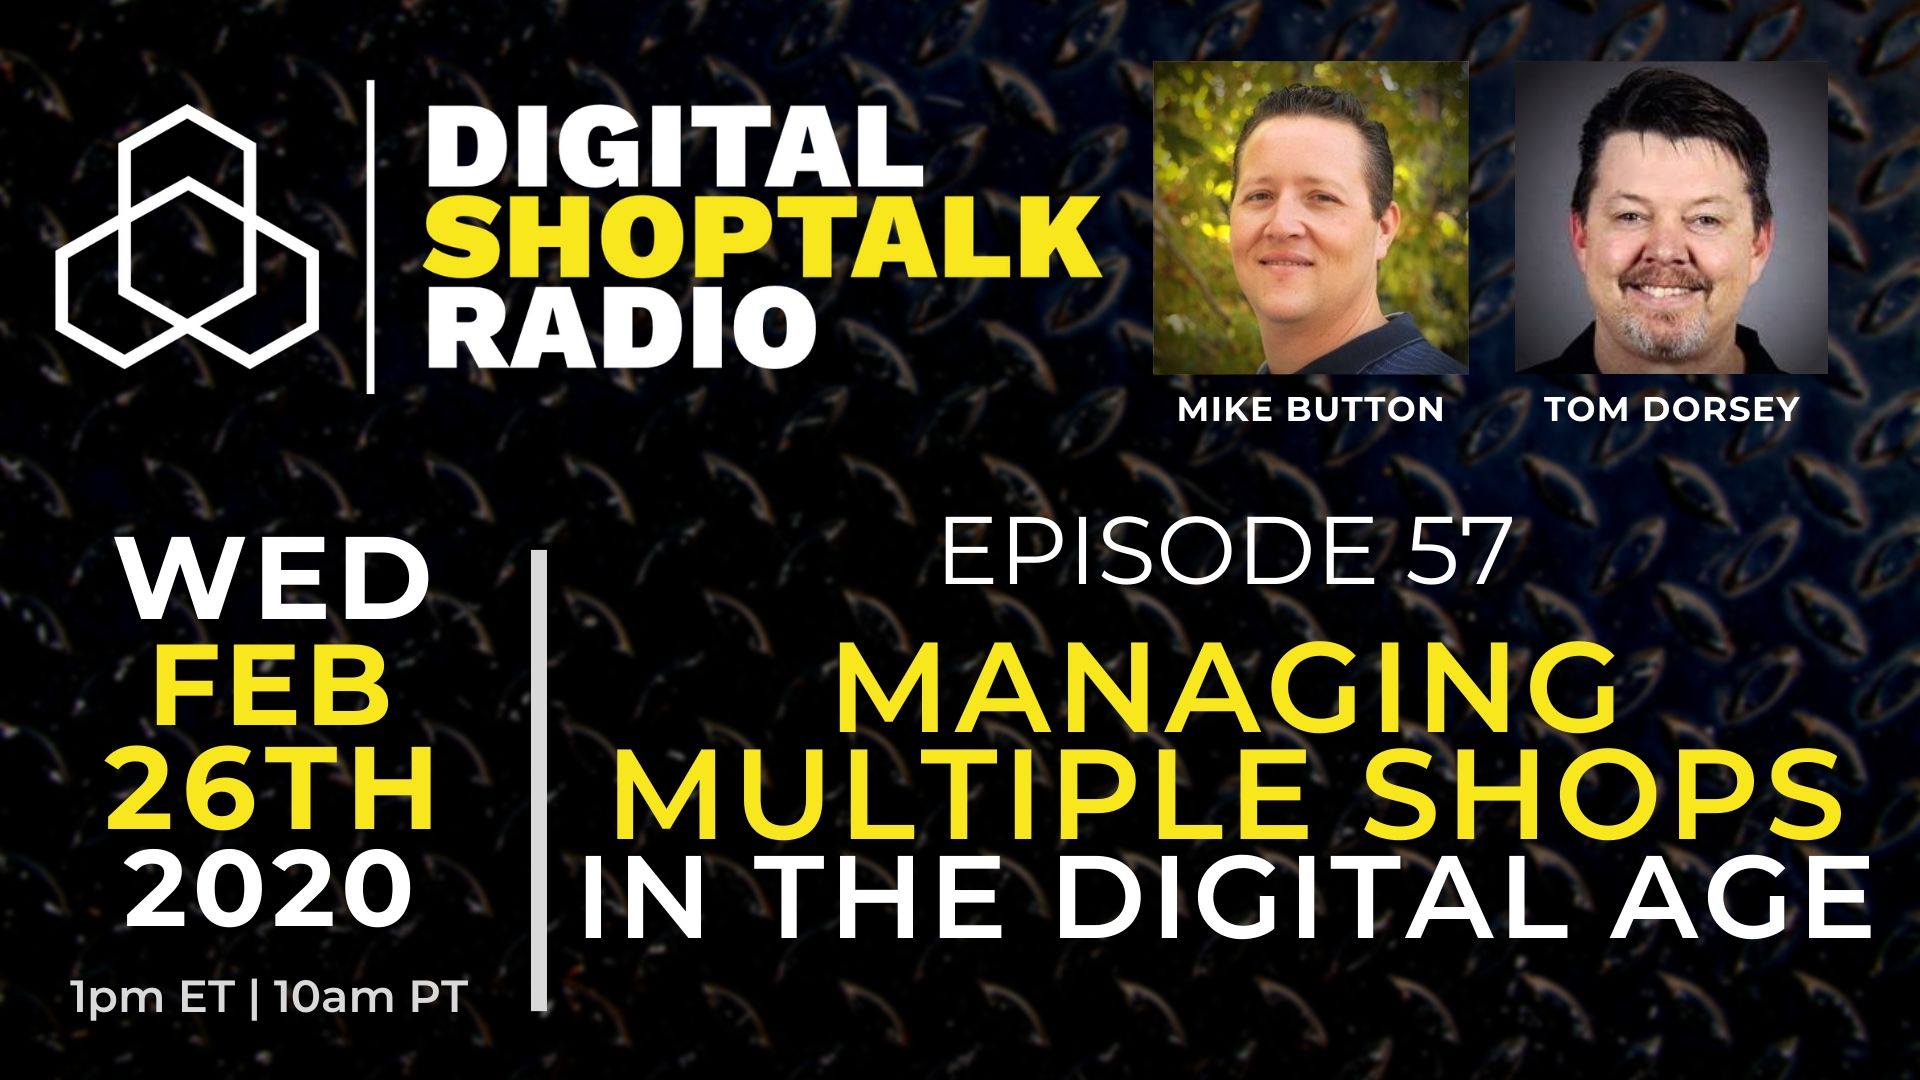 Promotional Graphic Digital Shop Talk Radio Episode 57.